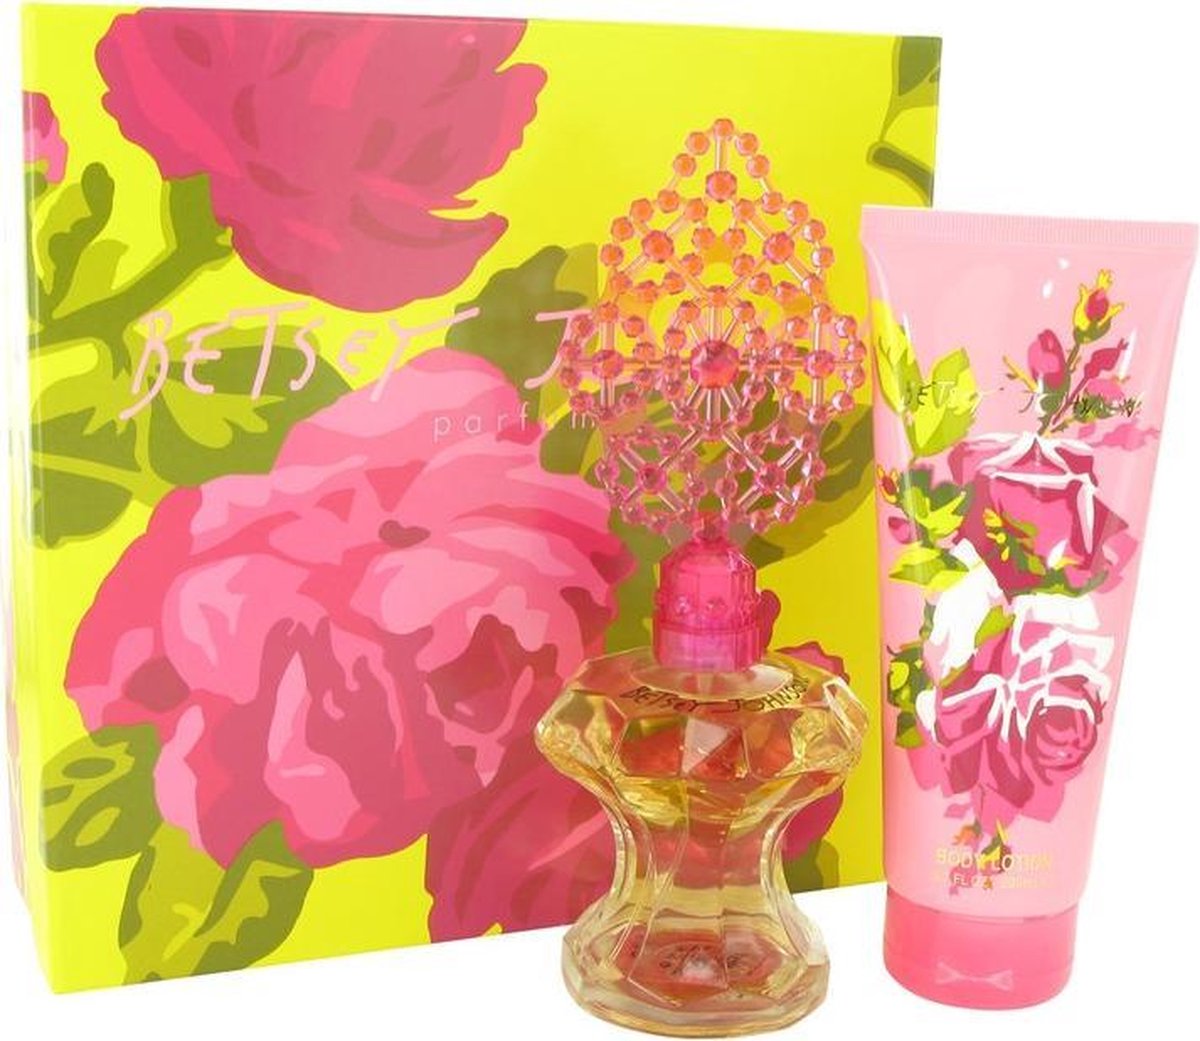 Betsey Johnson by Betsey Johnson - Gift Set - 100 ml Eau De Parfum Spray + 200 ml Body Lotion